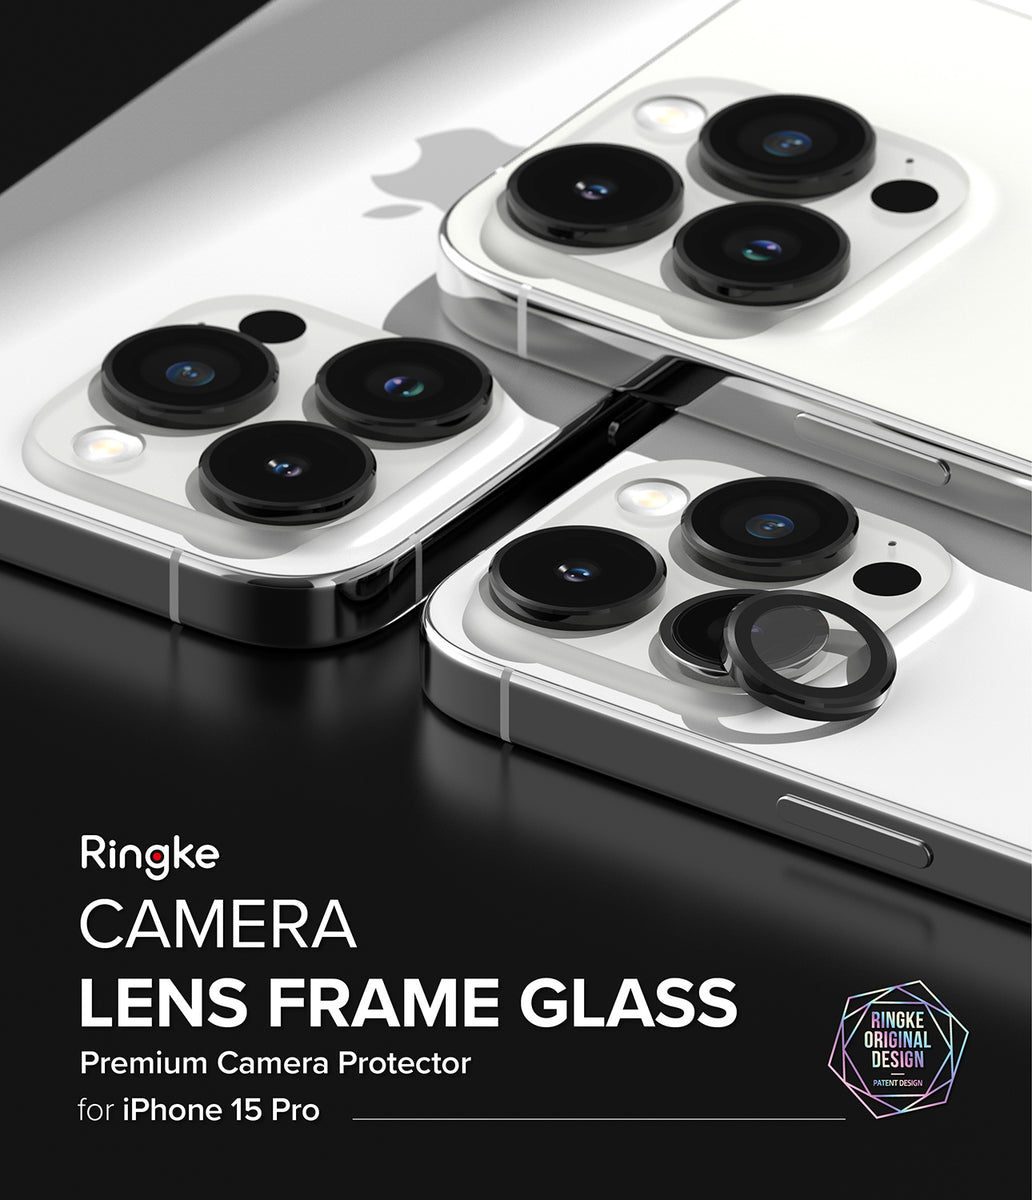 iPhone 15 Pro, Camera Lens Frame Glass